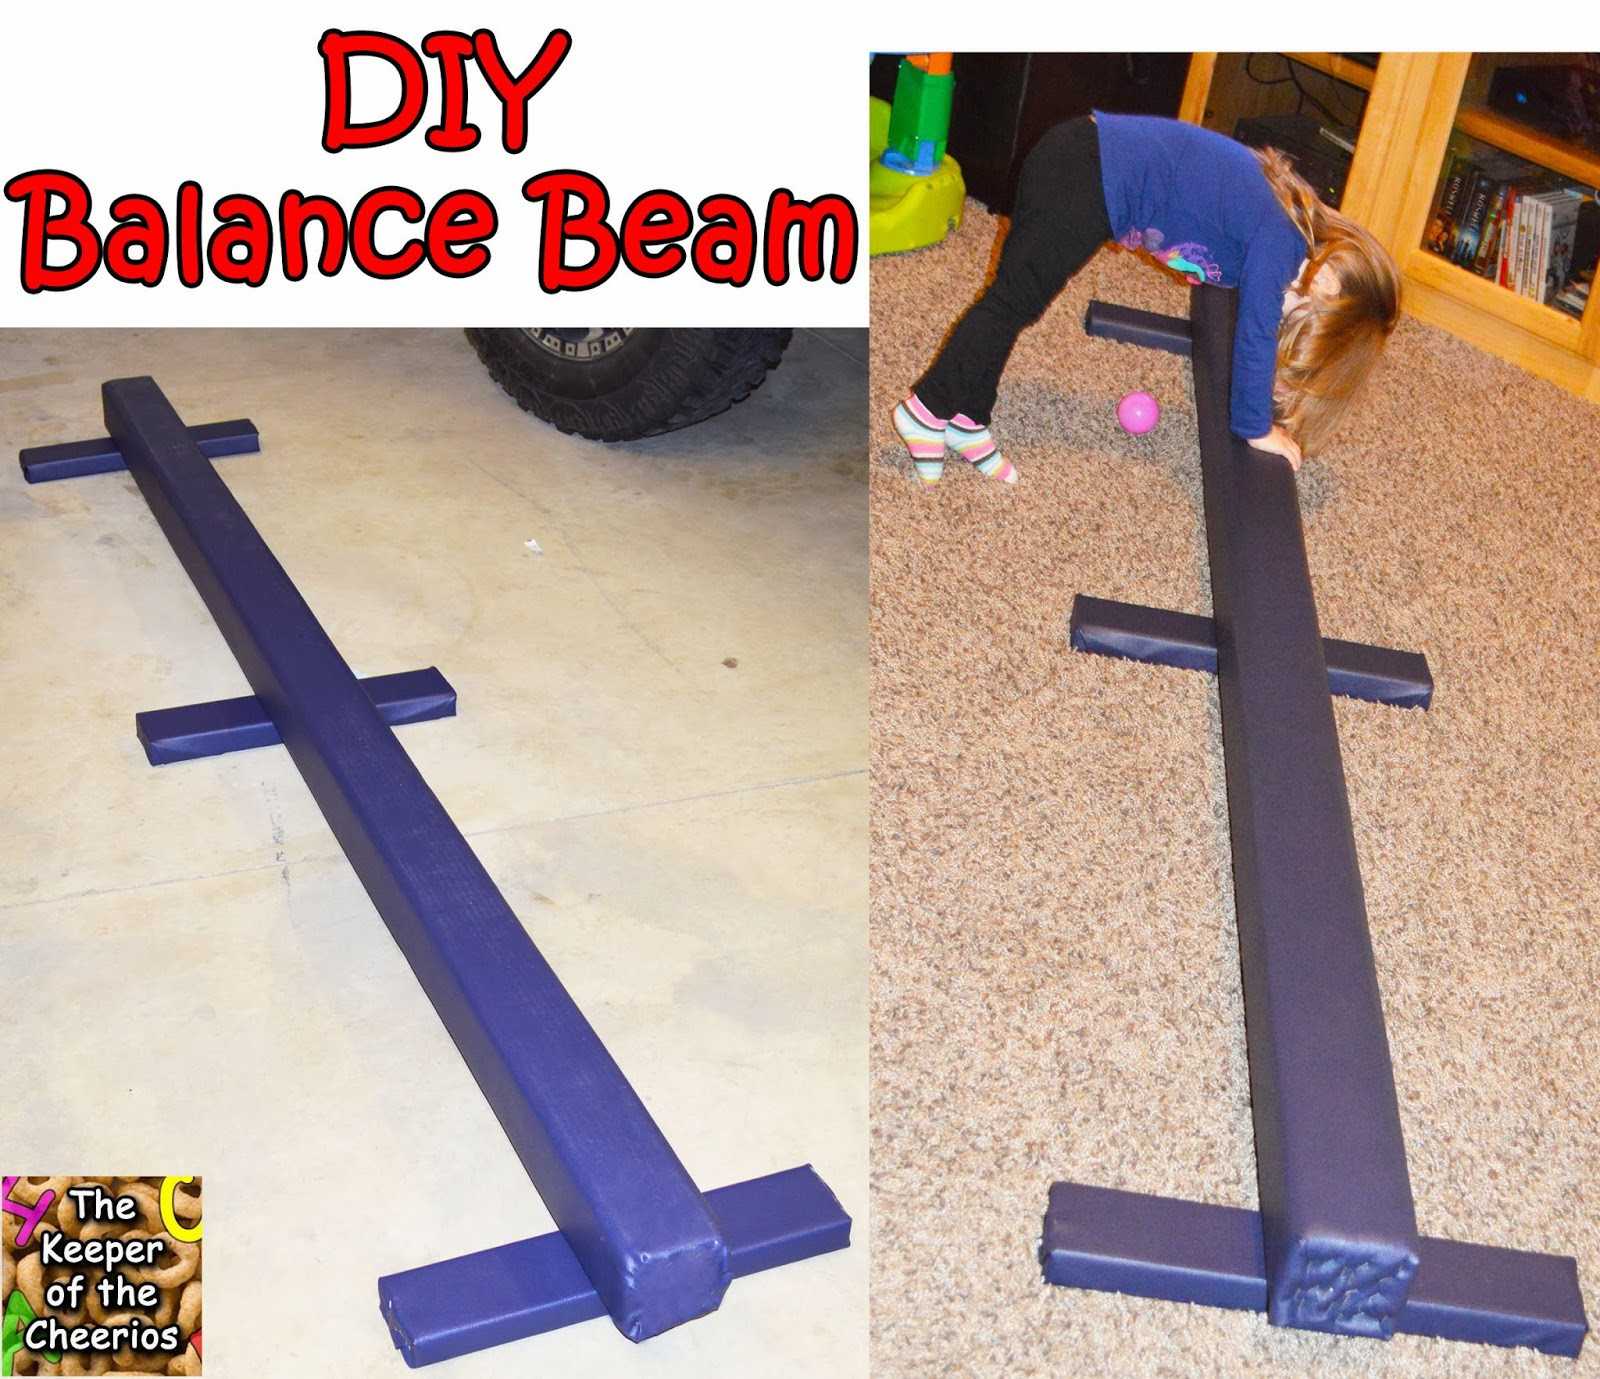 Best ideas about DIY Balance Beam
. Save or Pin DIY Balance Beam Now.